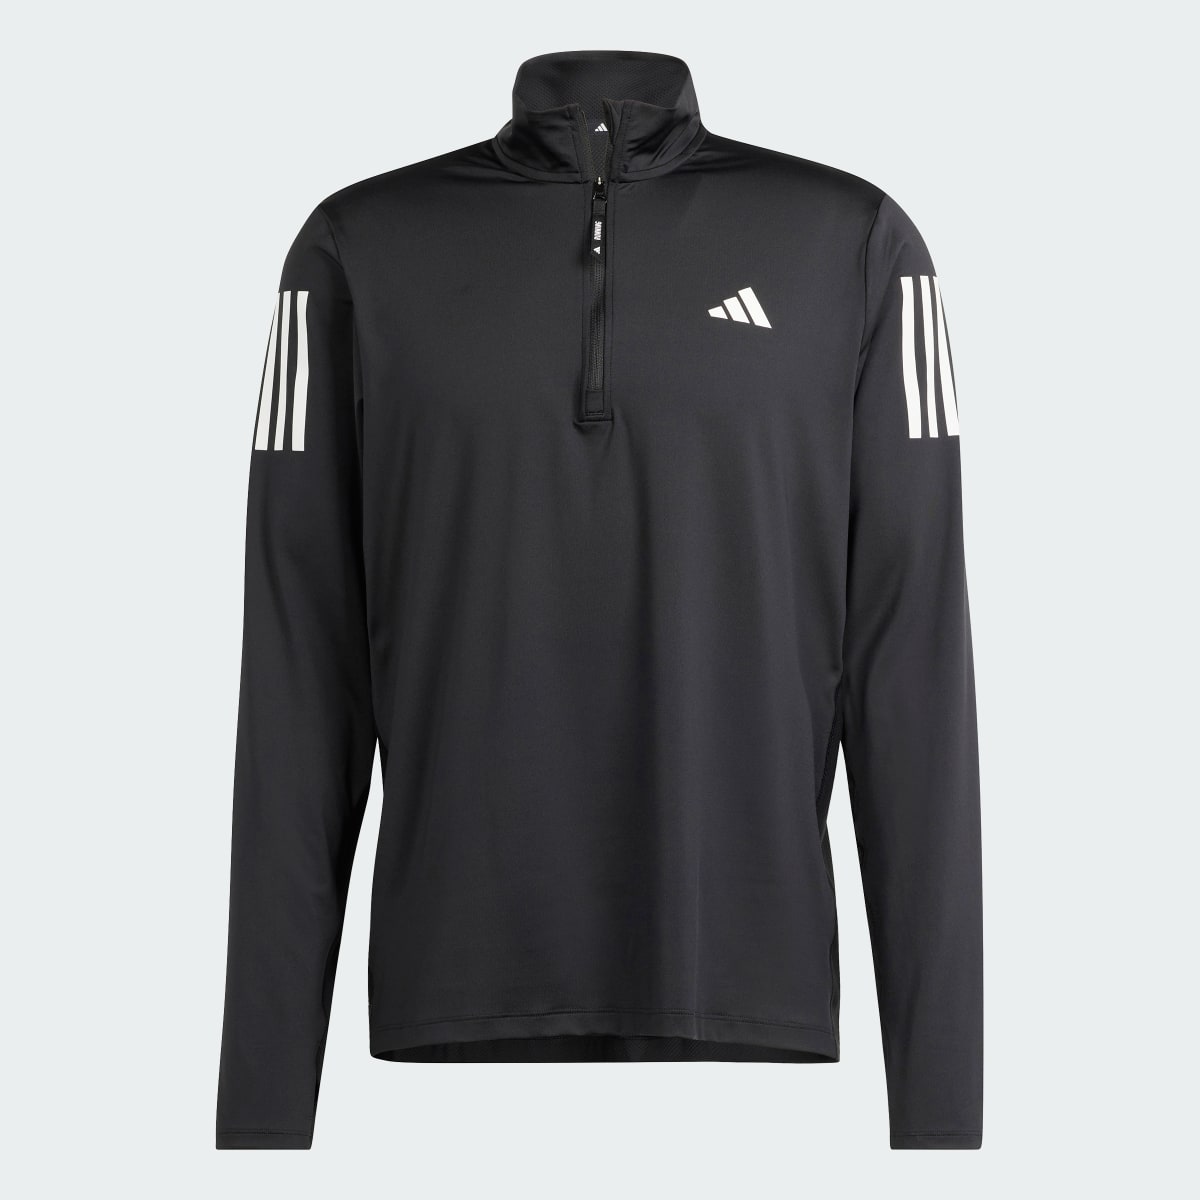 Adidas Own the Run Half-Zip Jacket. 5